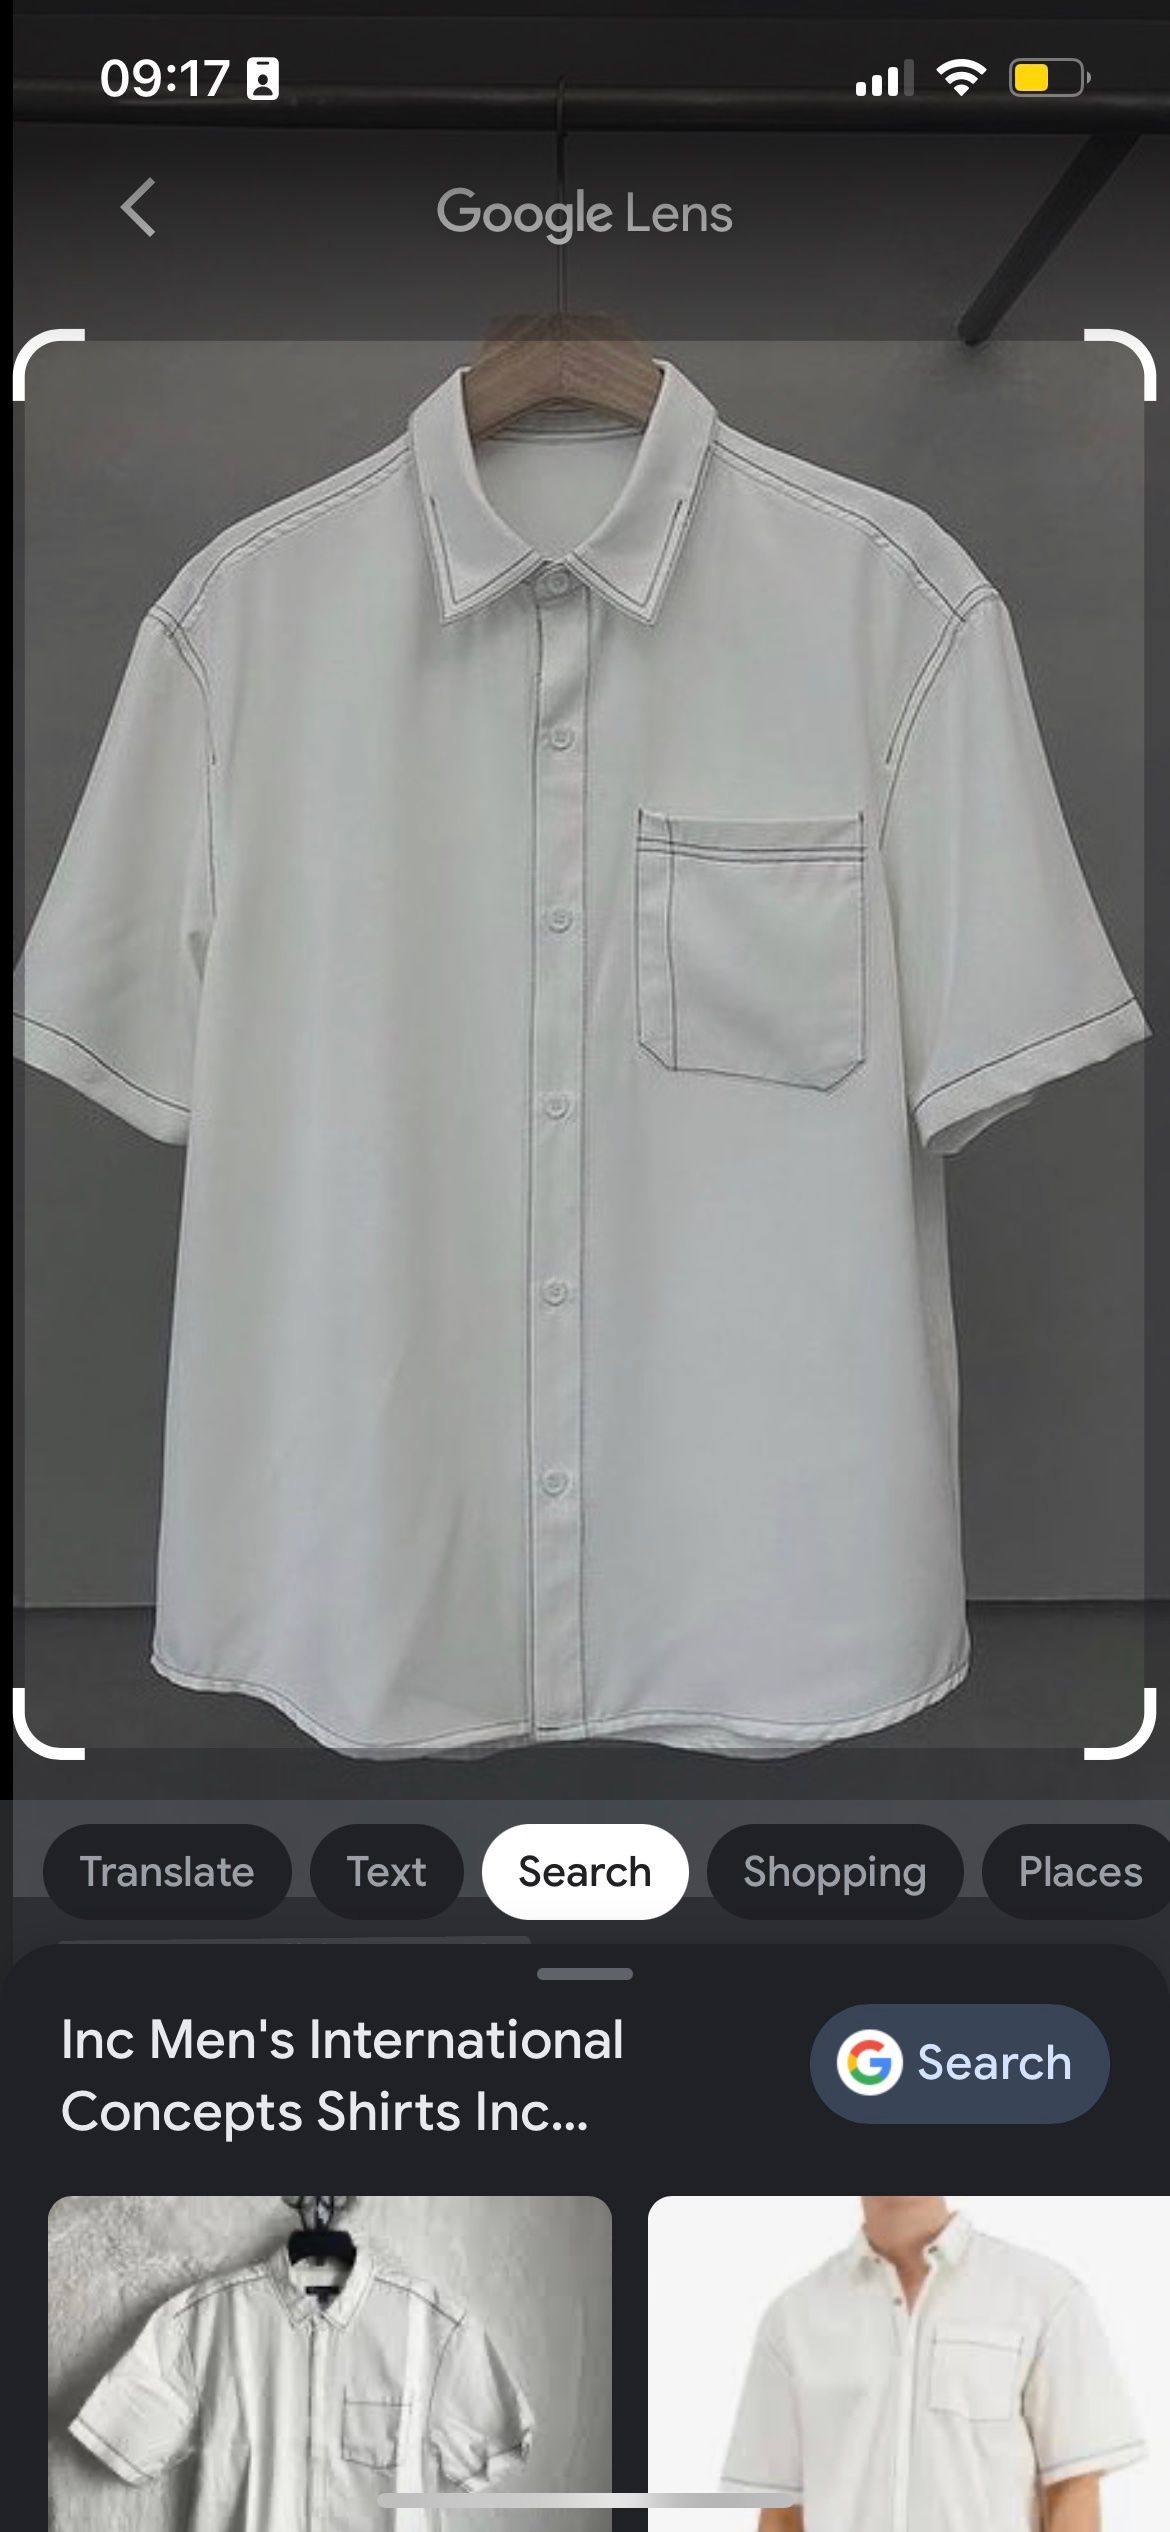 Google Lens searching the screenshot of a shirt on